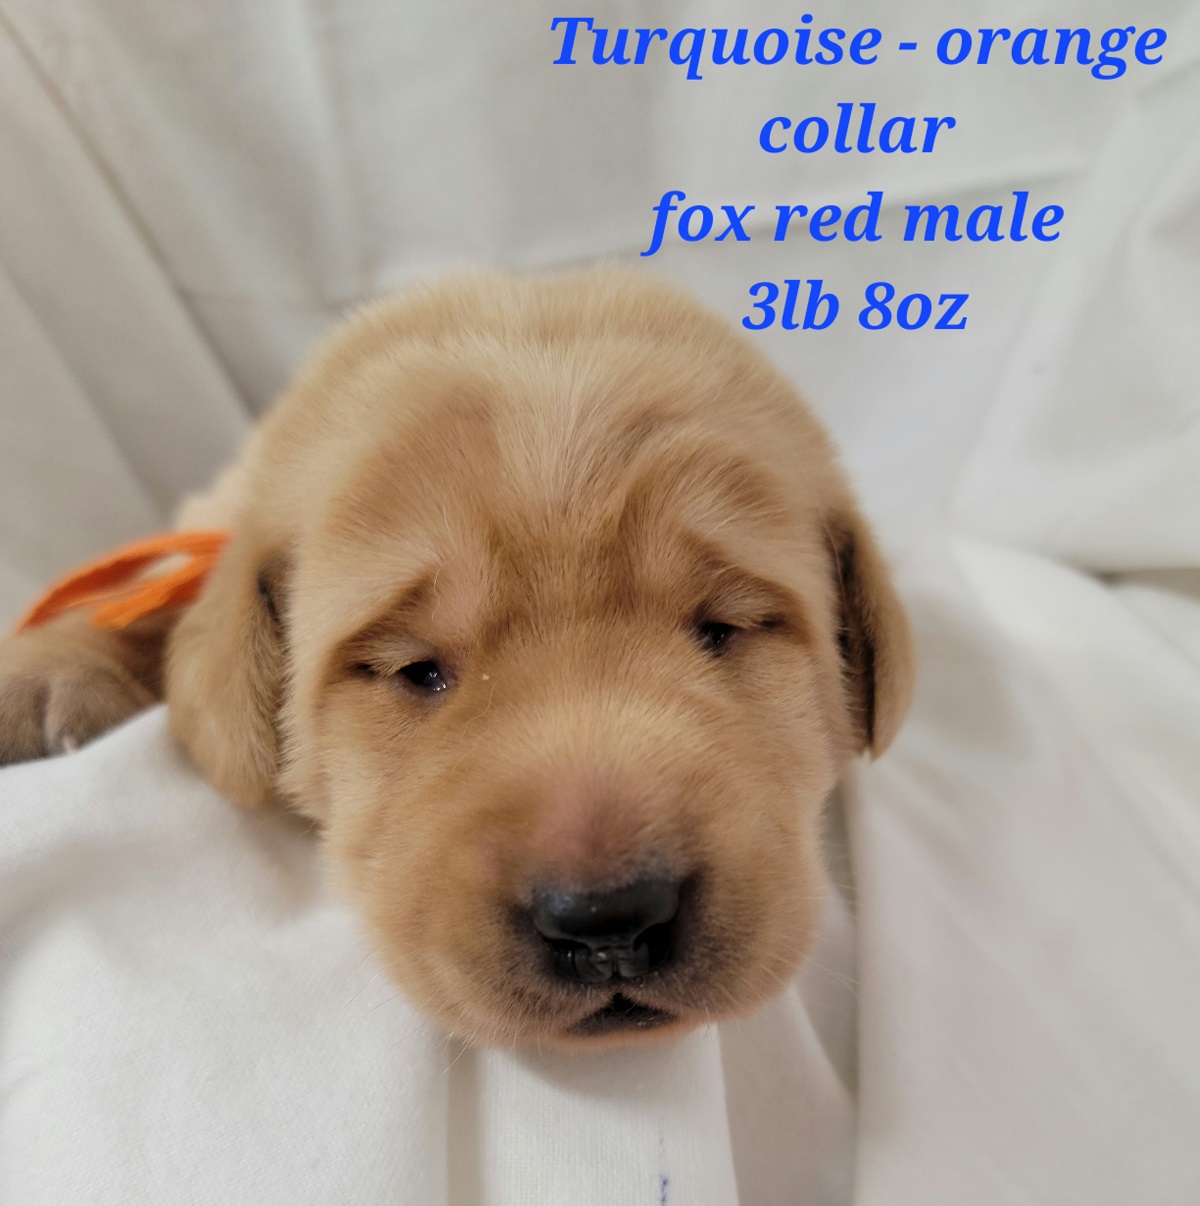 Rogue-orange collar.jpg